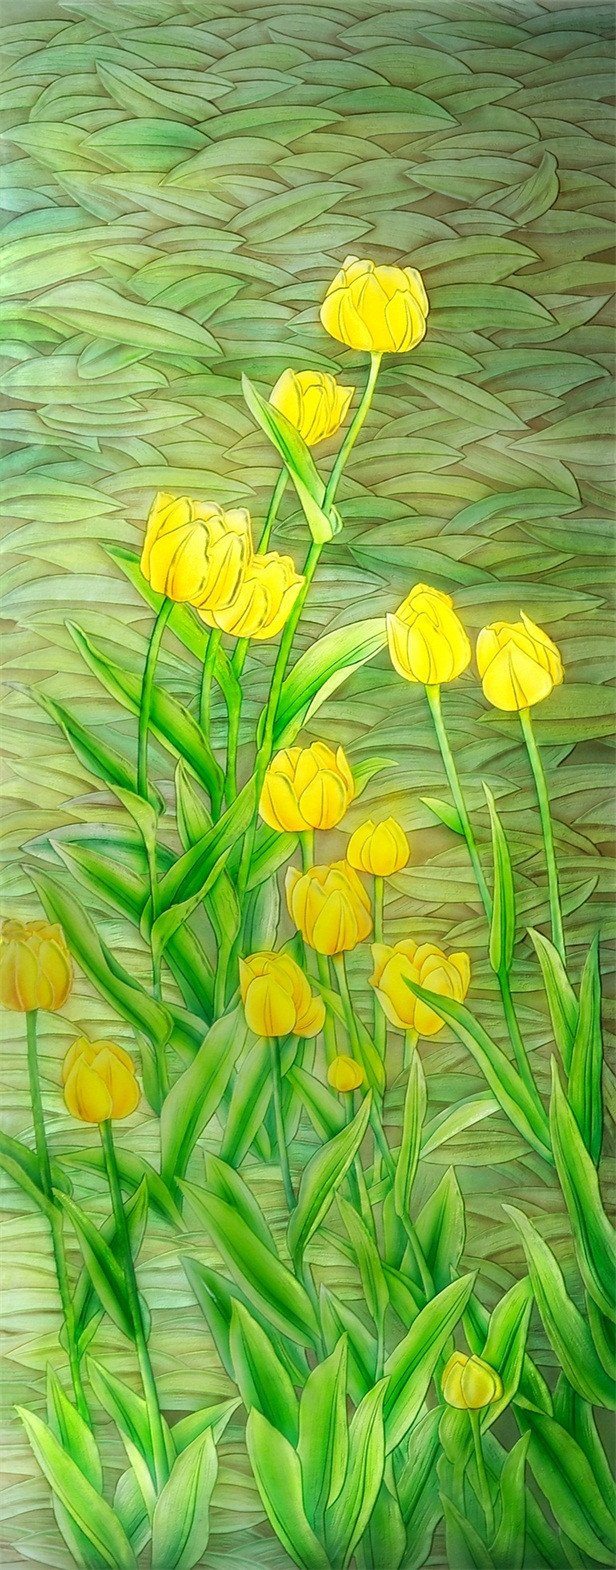 3D tulips green leaf oil Painting door mural Wallpaper AJ Wallpaper 